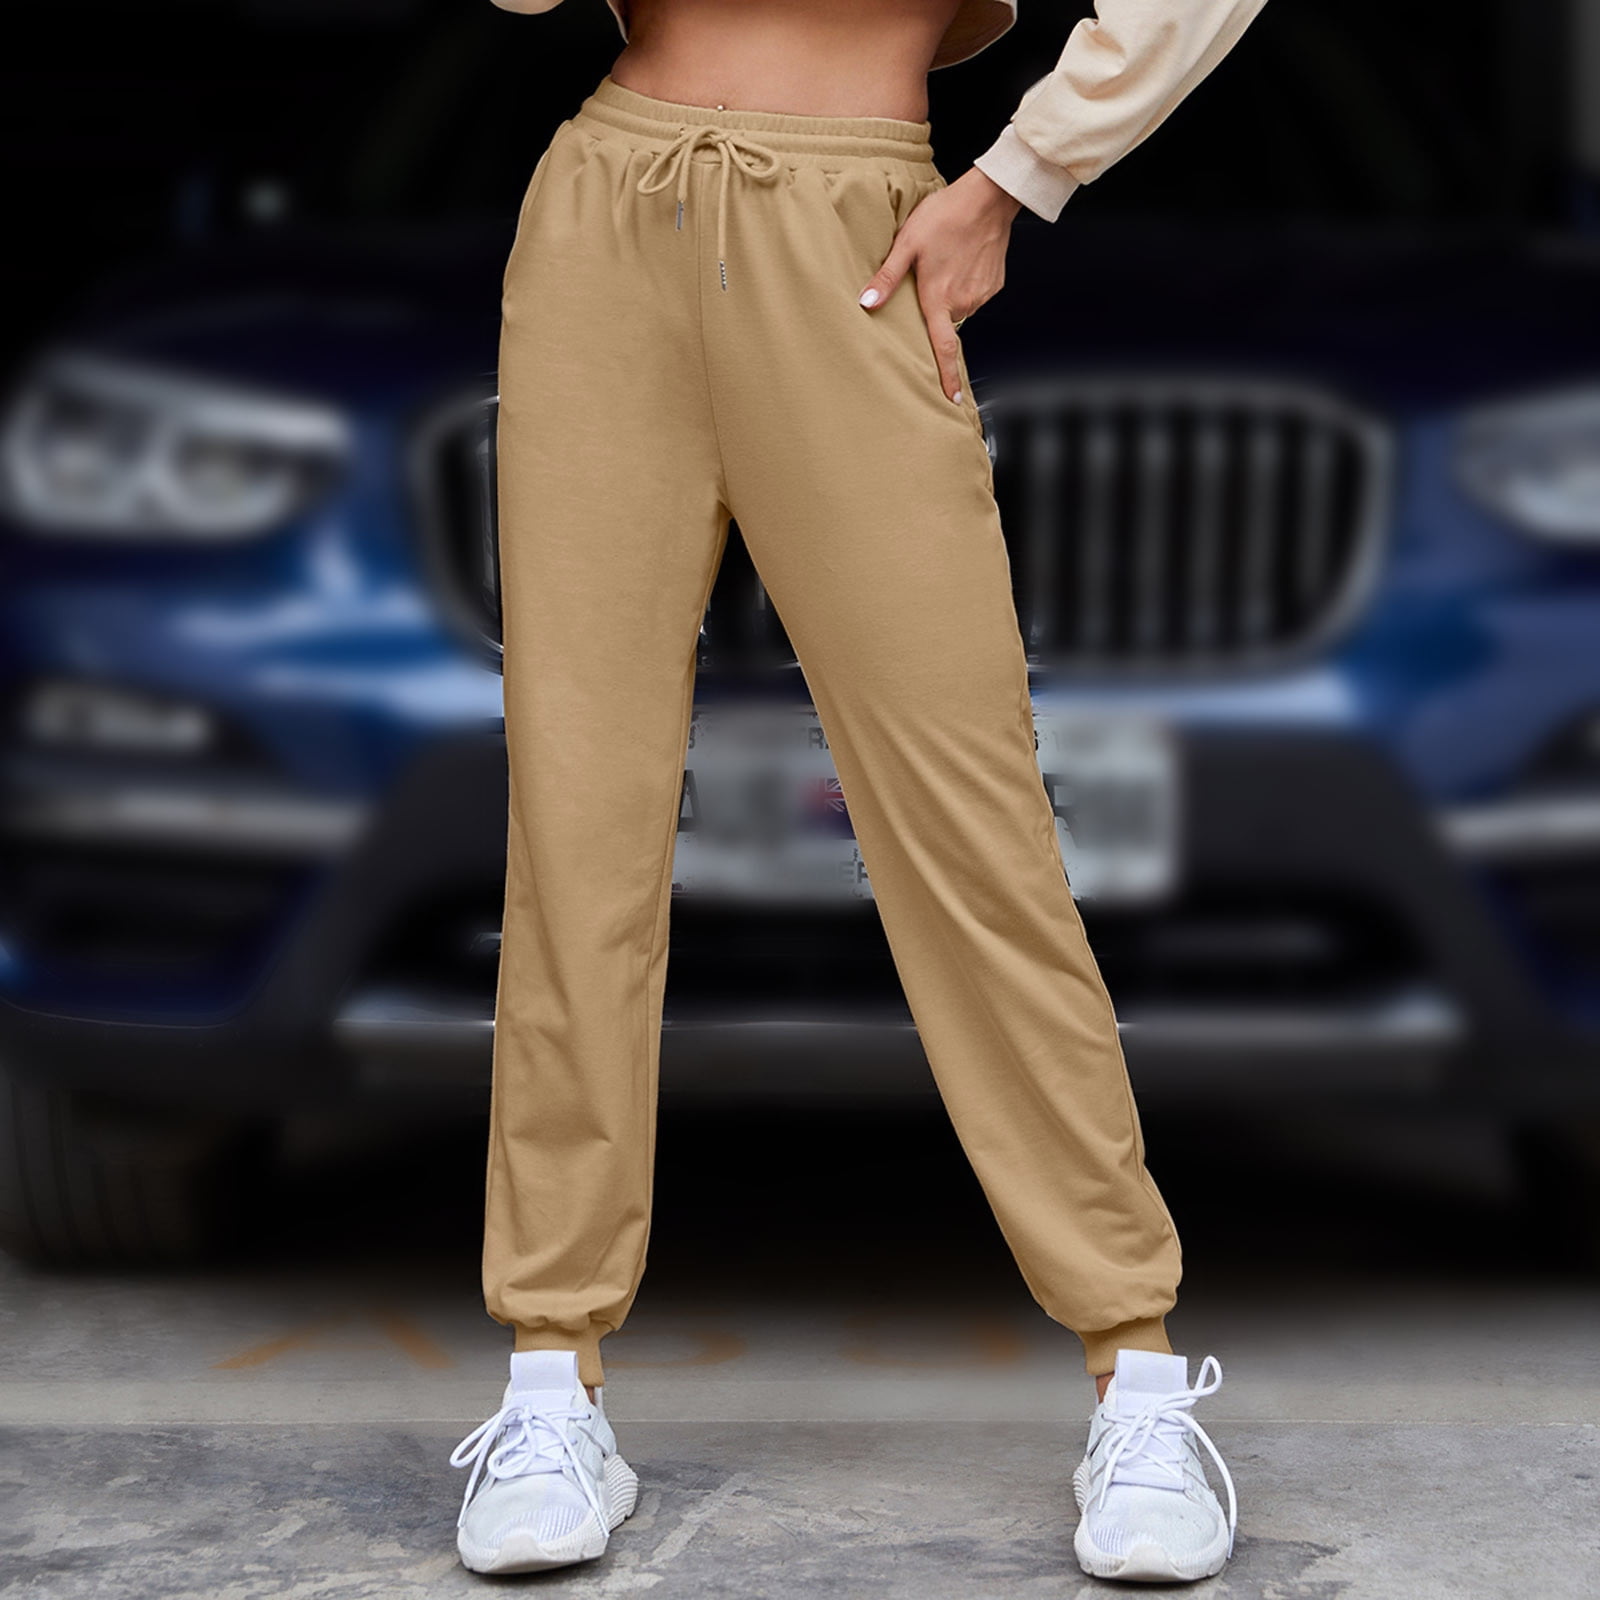 Aayomet Dress Pants Women Soft Solid Soft Stretch Women's